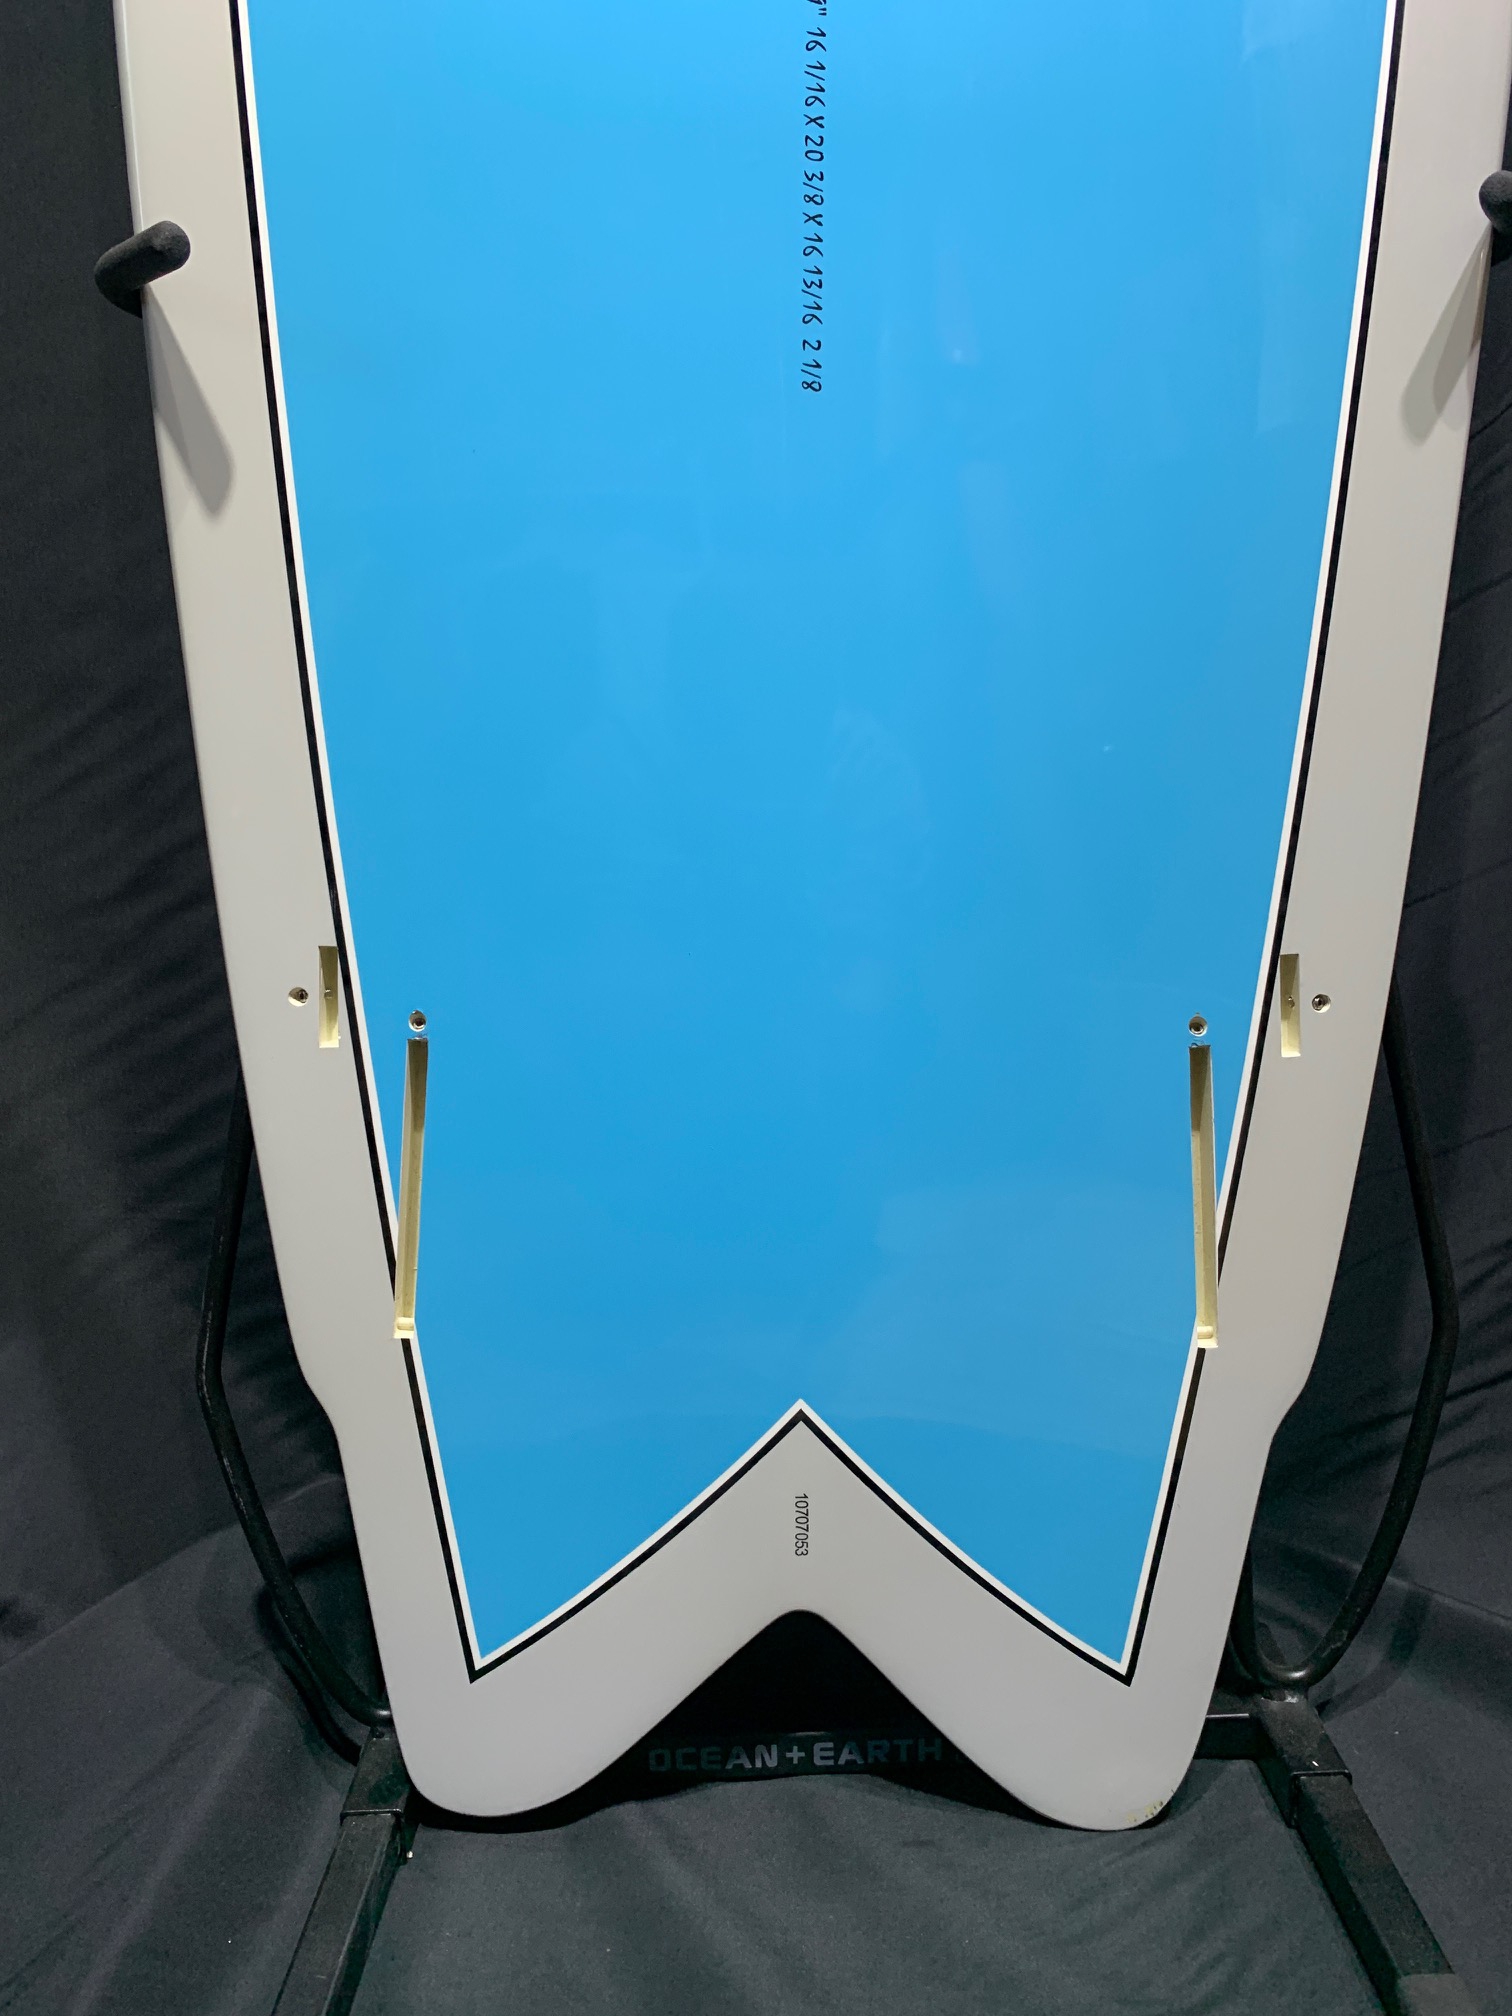 surfboards-16